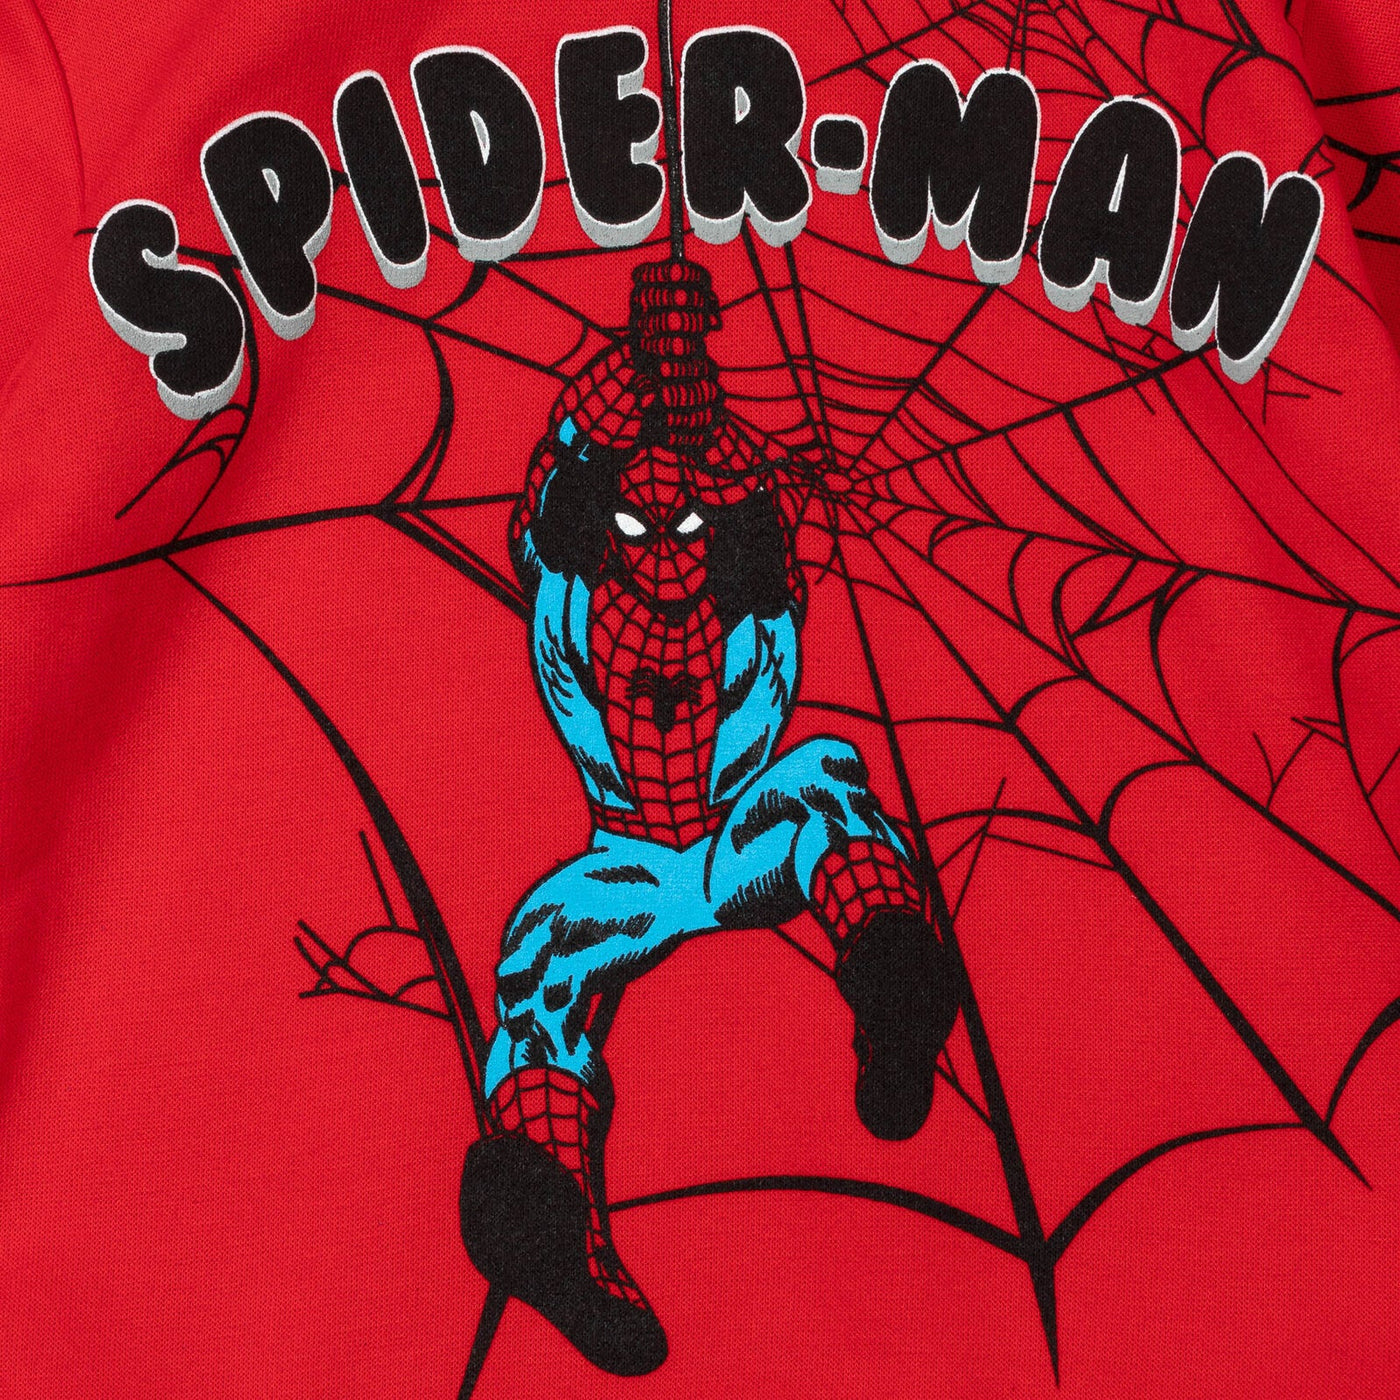 Marvel Spider - Man Fleece Pullover Sweatshirt and Pants Set - imagikids